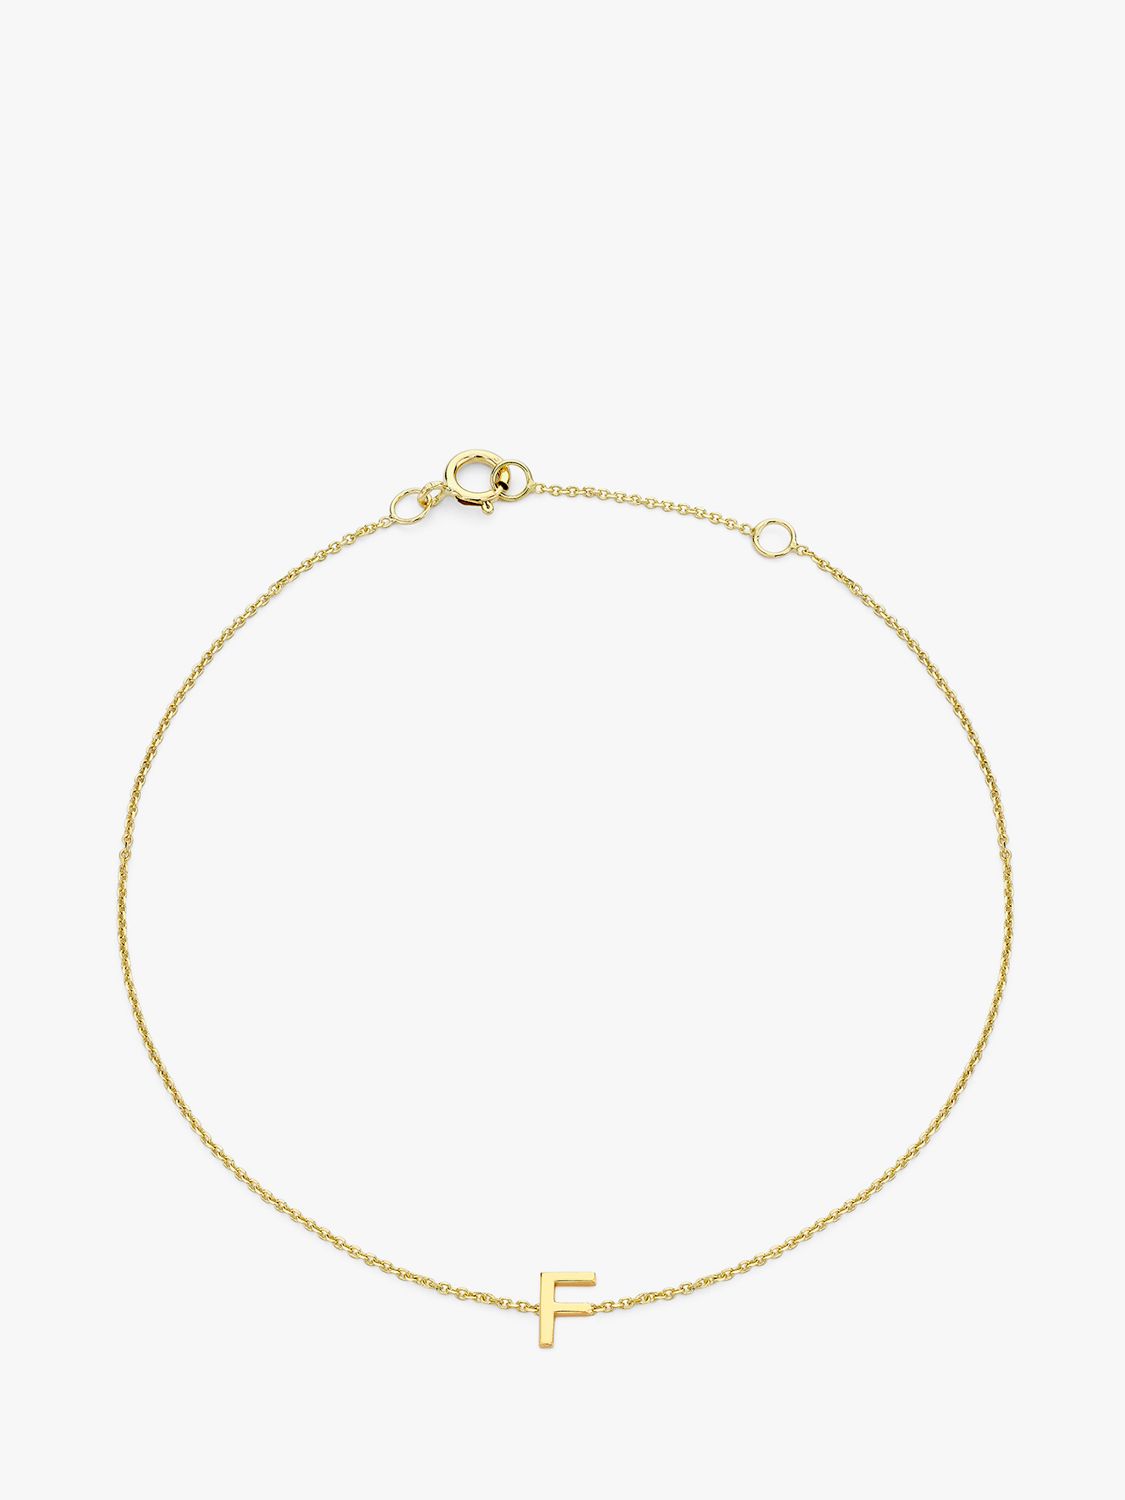 IBB 9ct Yellow Gold Initial Bracelet, F